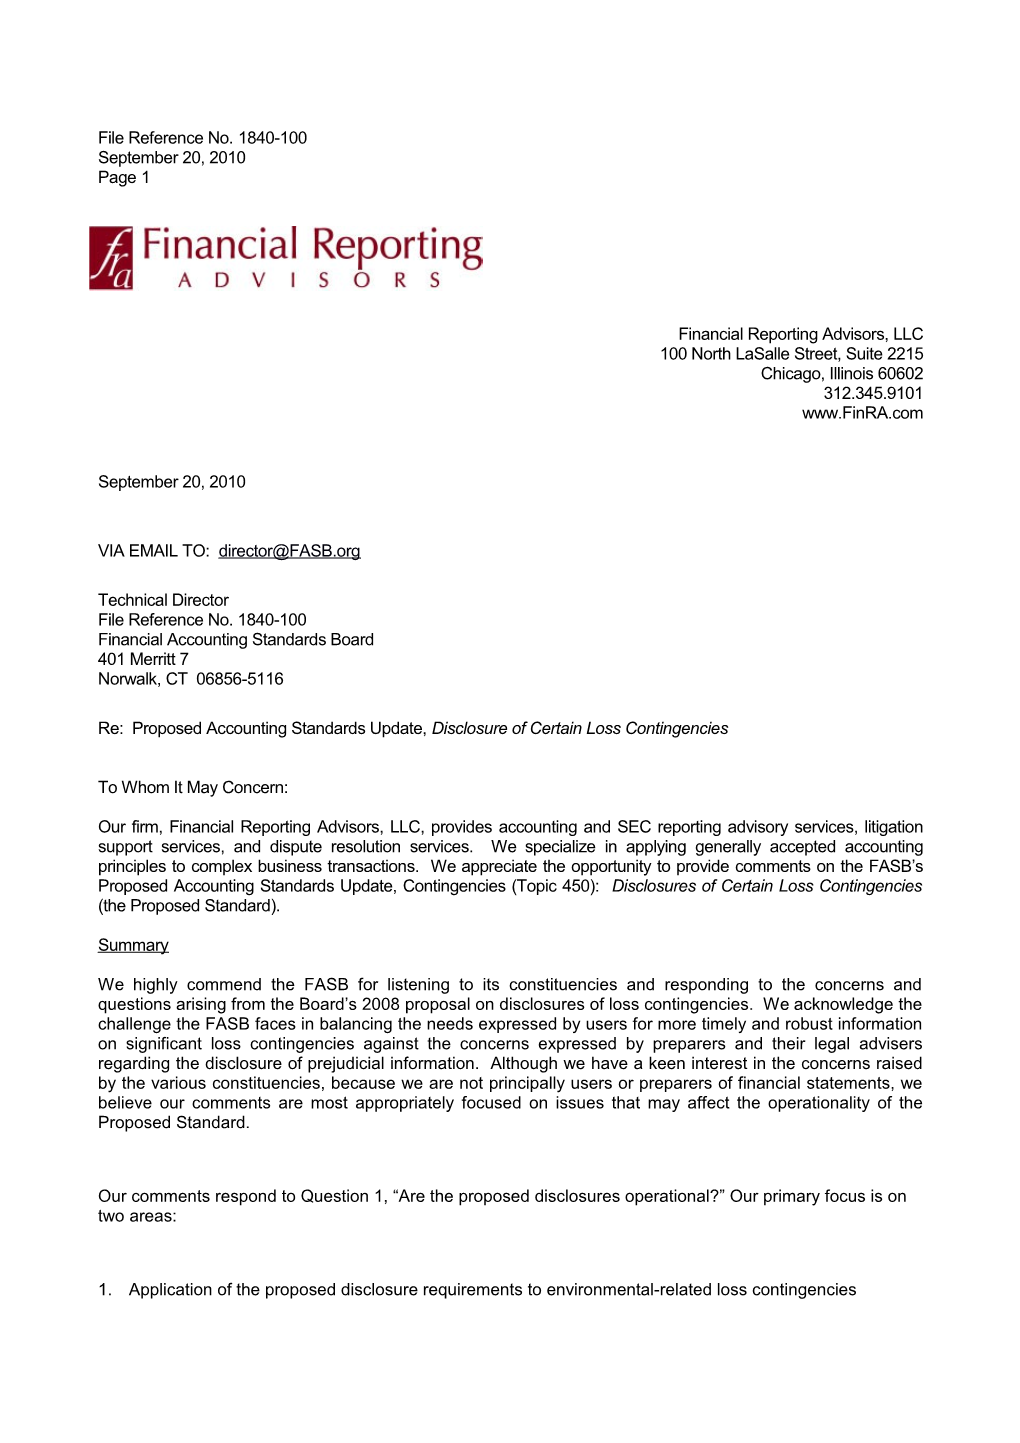 Financial Reporting Advisors, LLC